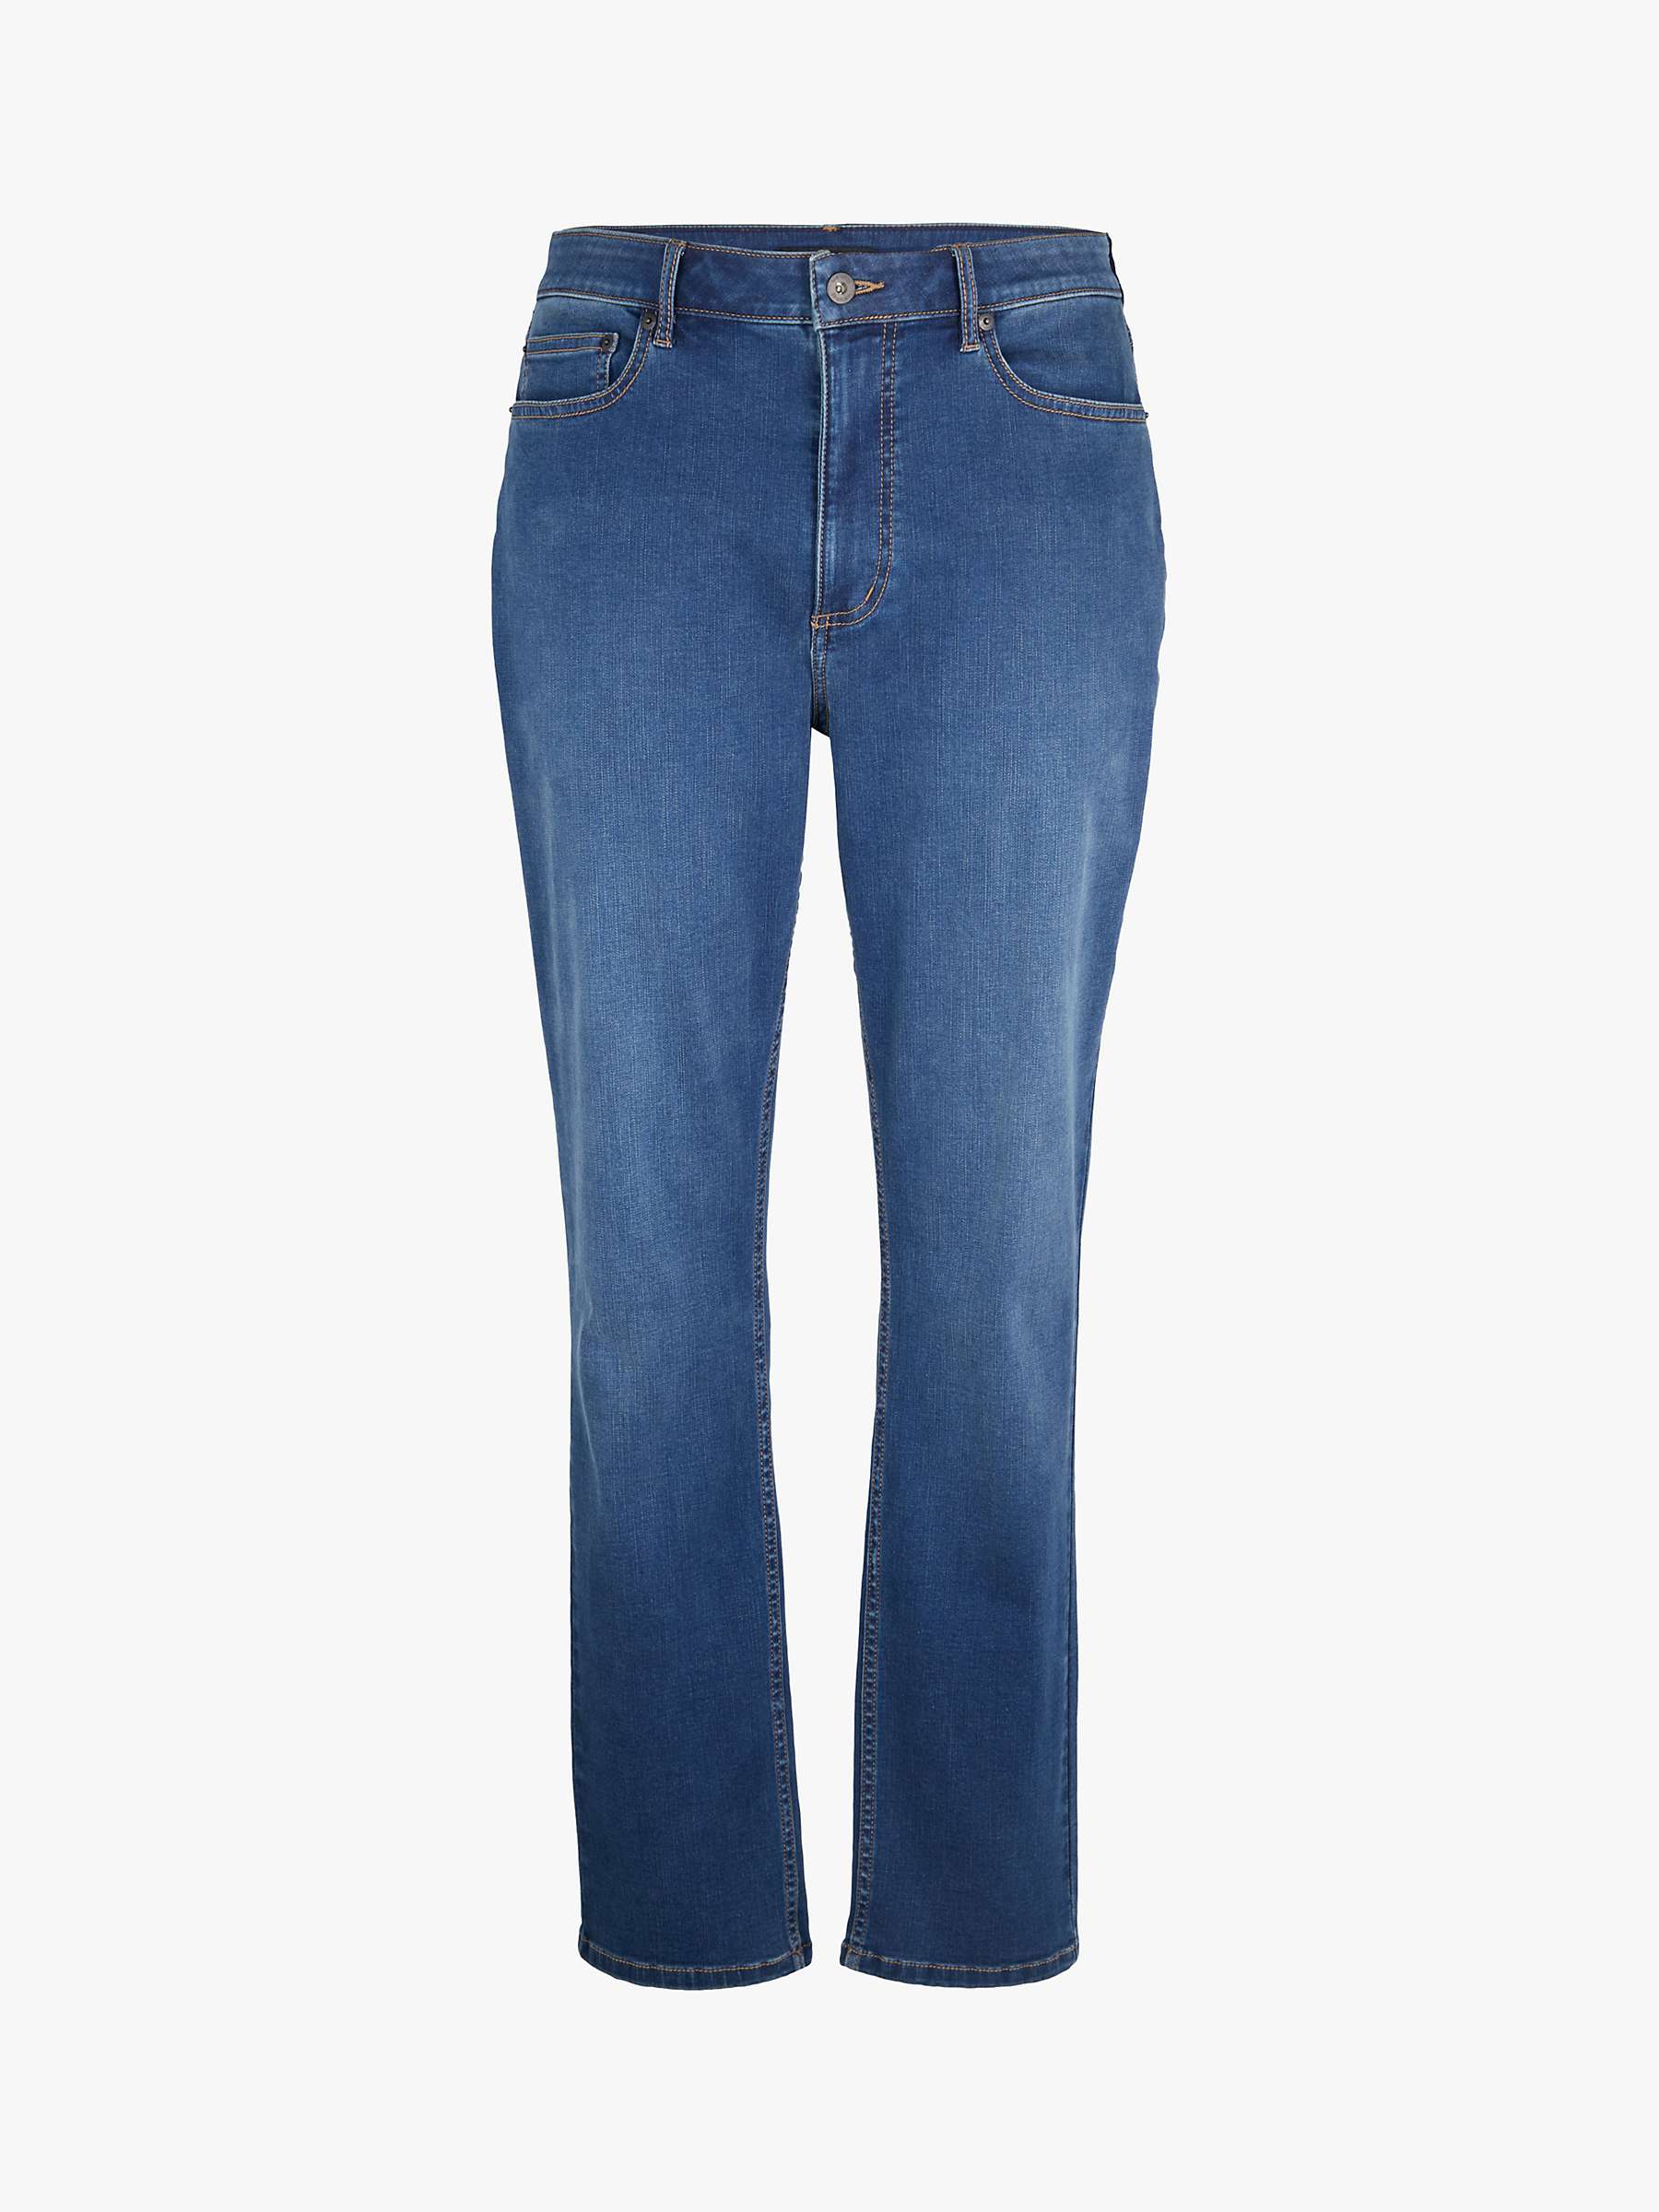 Buy Rohan Flex Tapered Fit Stretch Jeans, Mid Denim Online at johnlewis.com